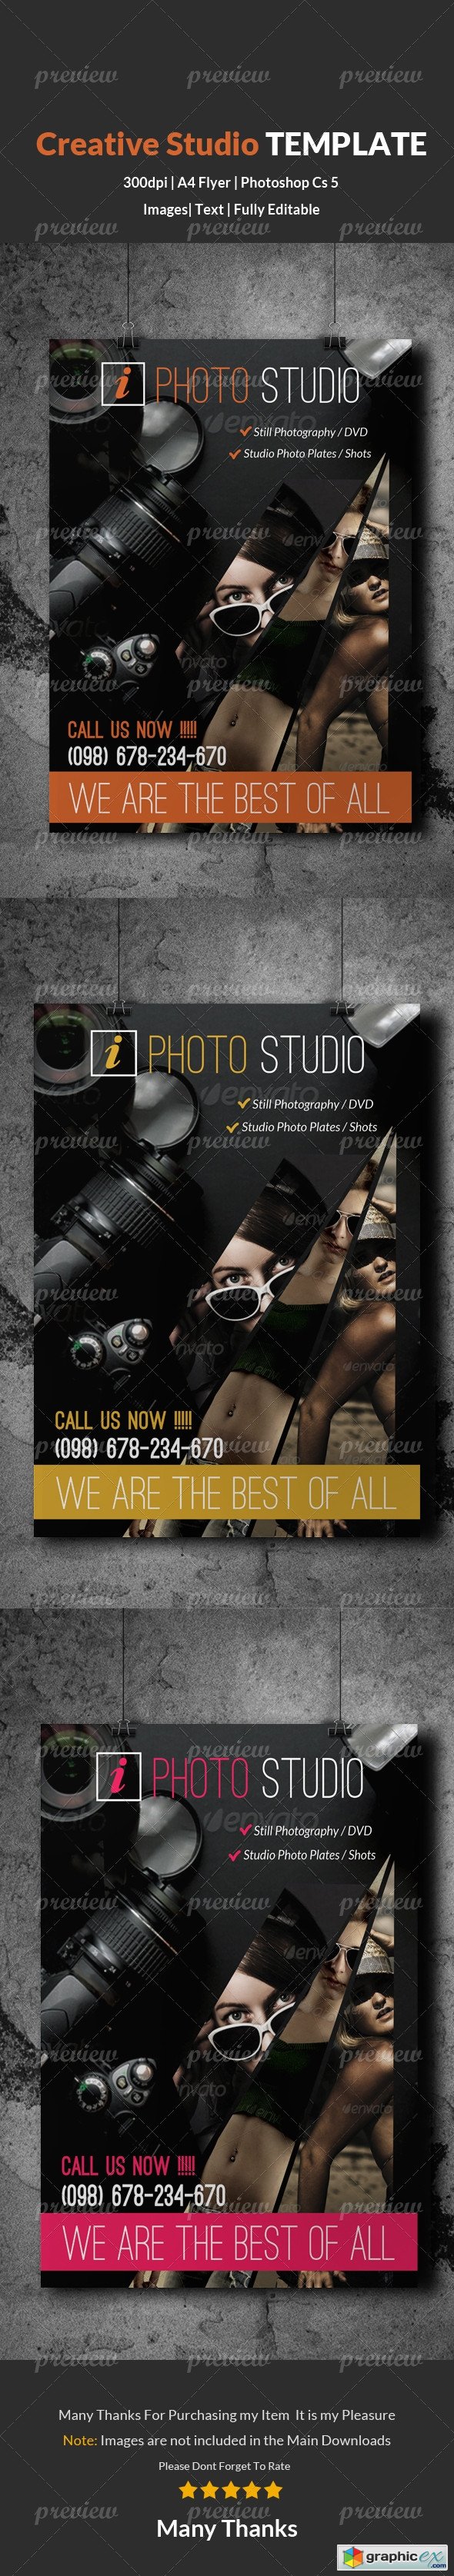 Photography & Photo Studio Flyer Template